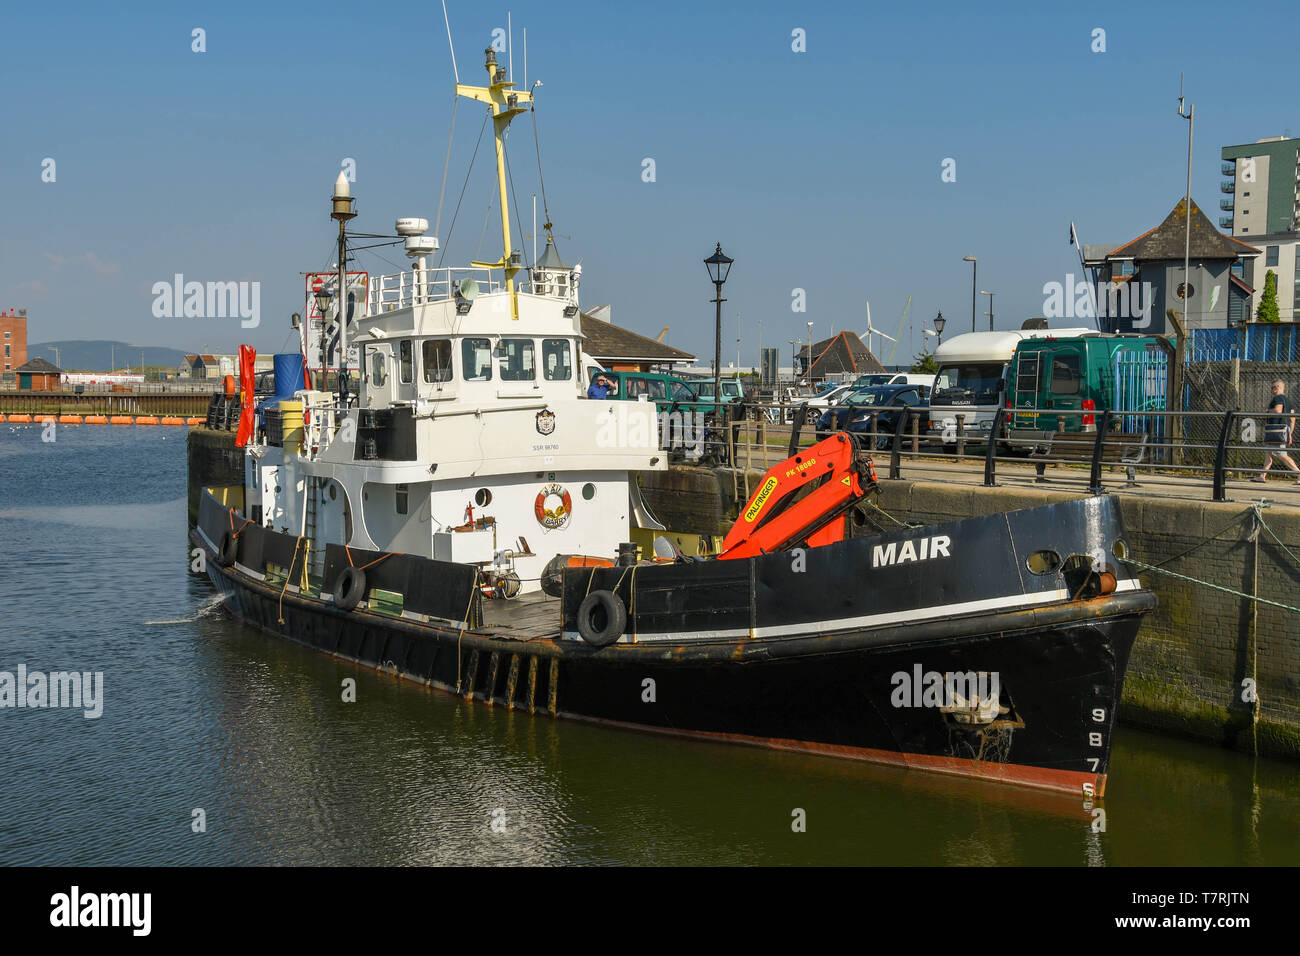 SWANSEA, WALES - JULY 2018: The motor vessel 'Mair' docked in Swansea marina Stock Photo